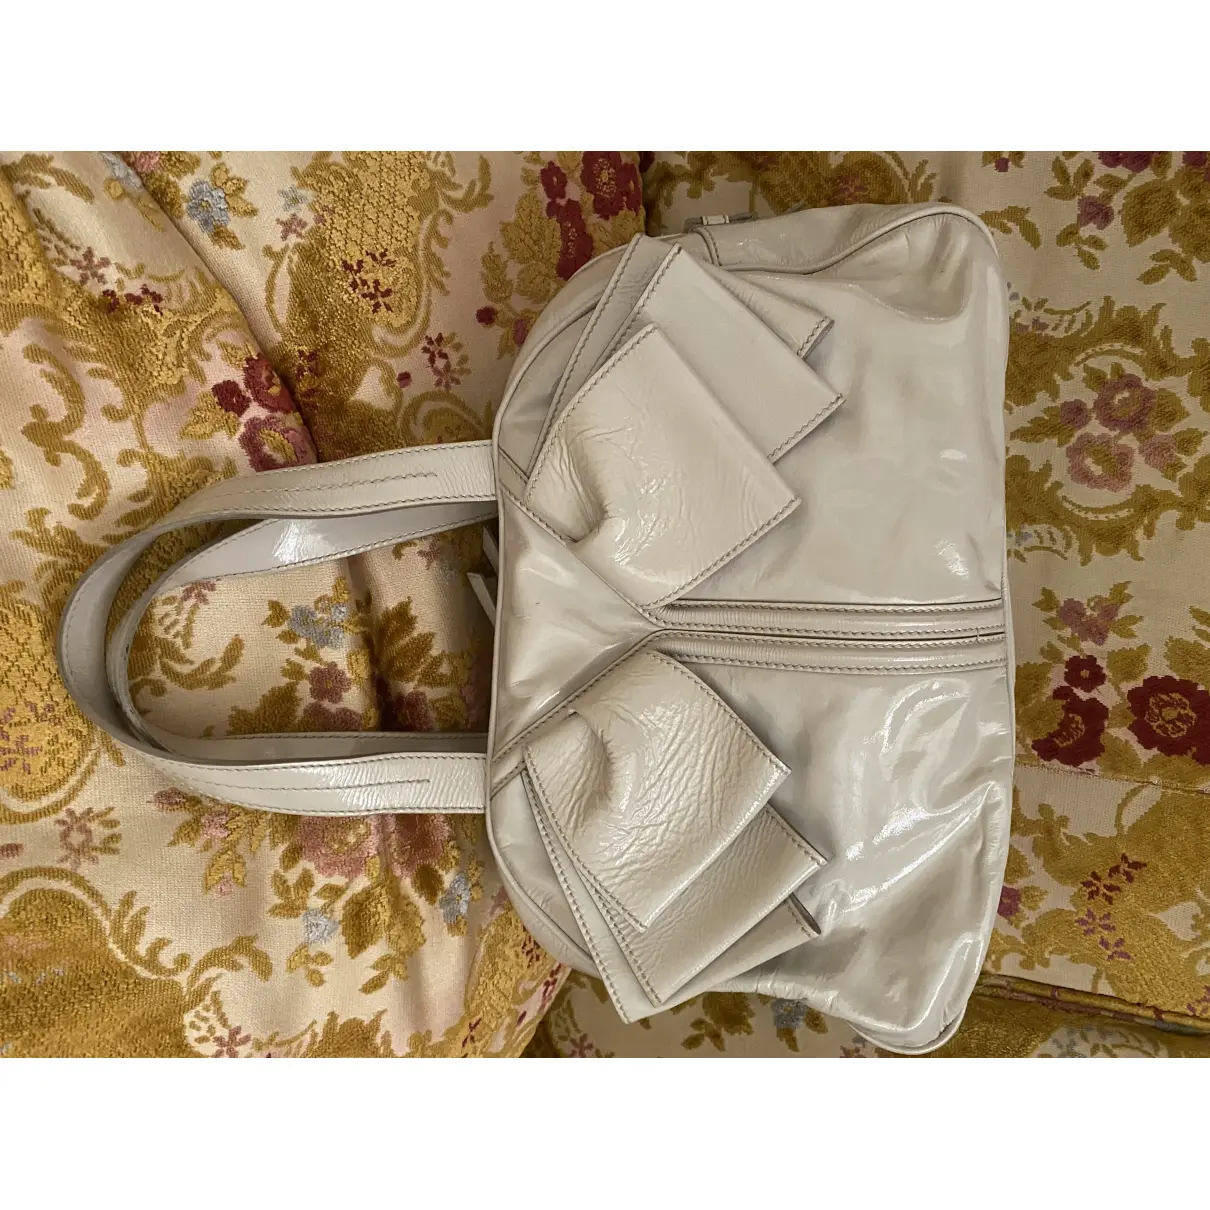 Patent leather handbag Yves Saint Laurent - Vintage